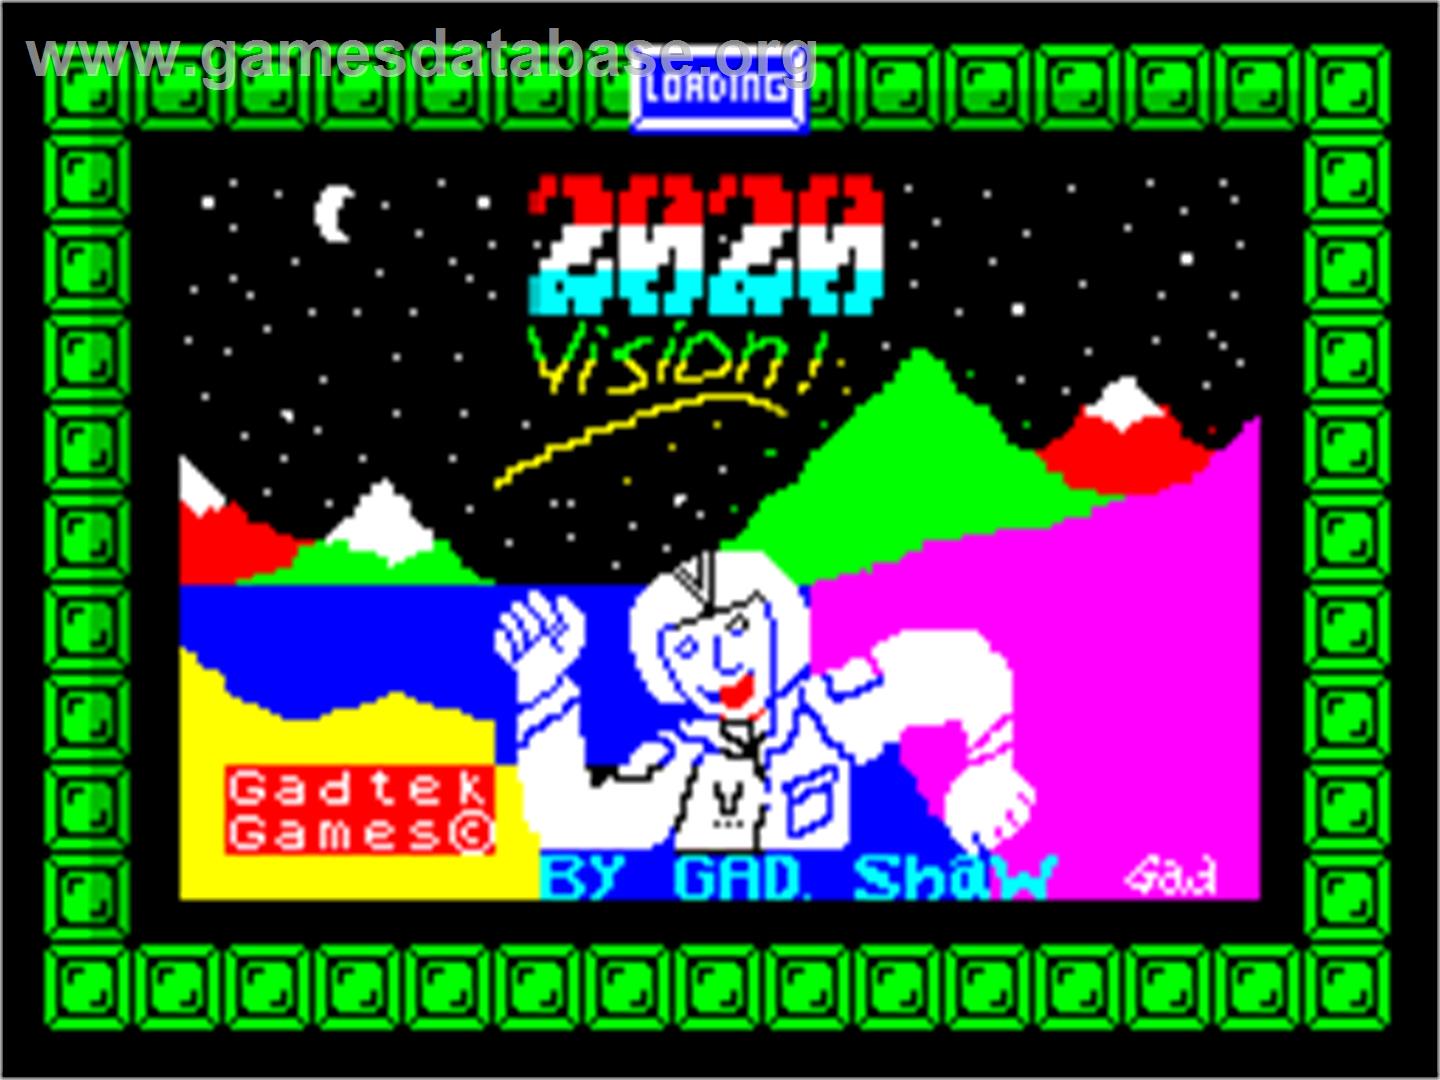 2020 Vision - Sinclair ZX Spectrum - Artwork - Title Screen